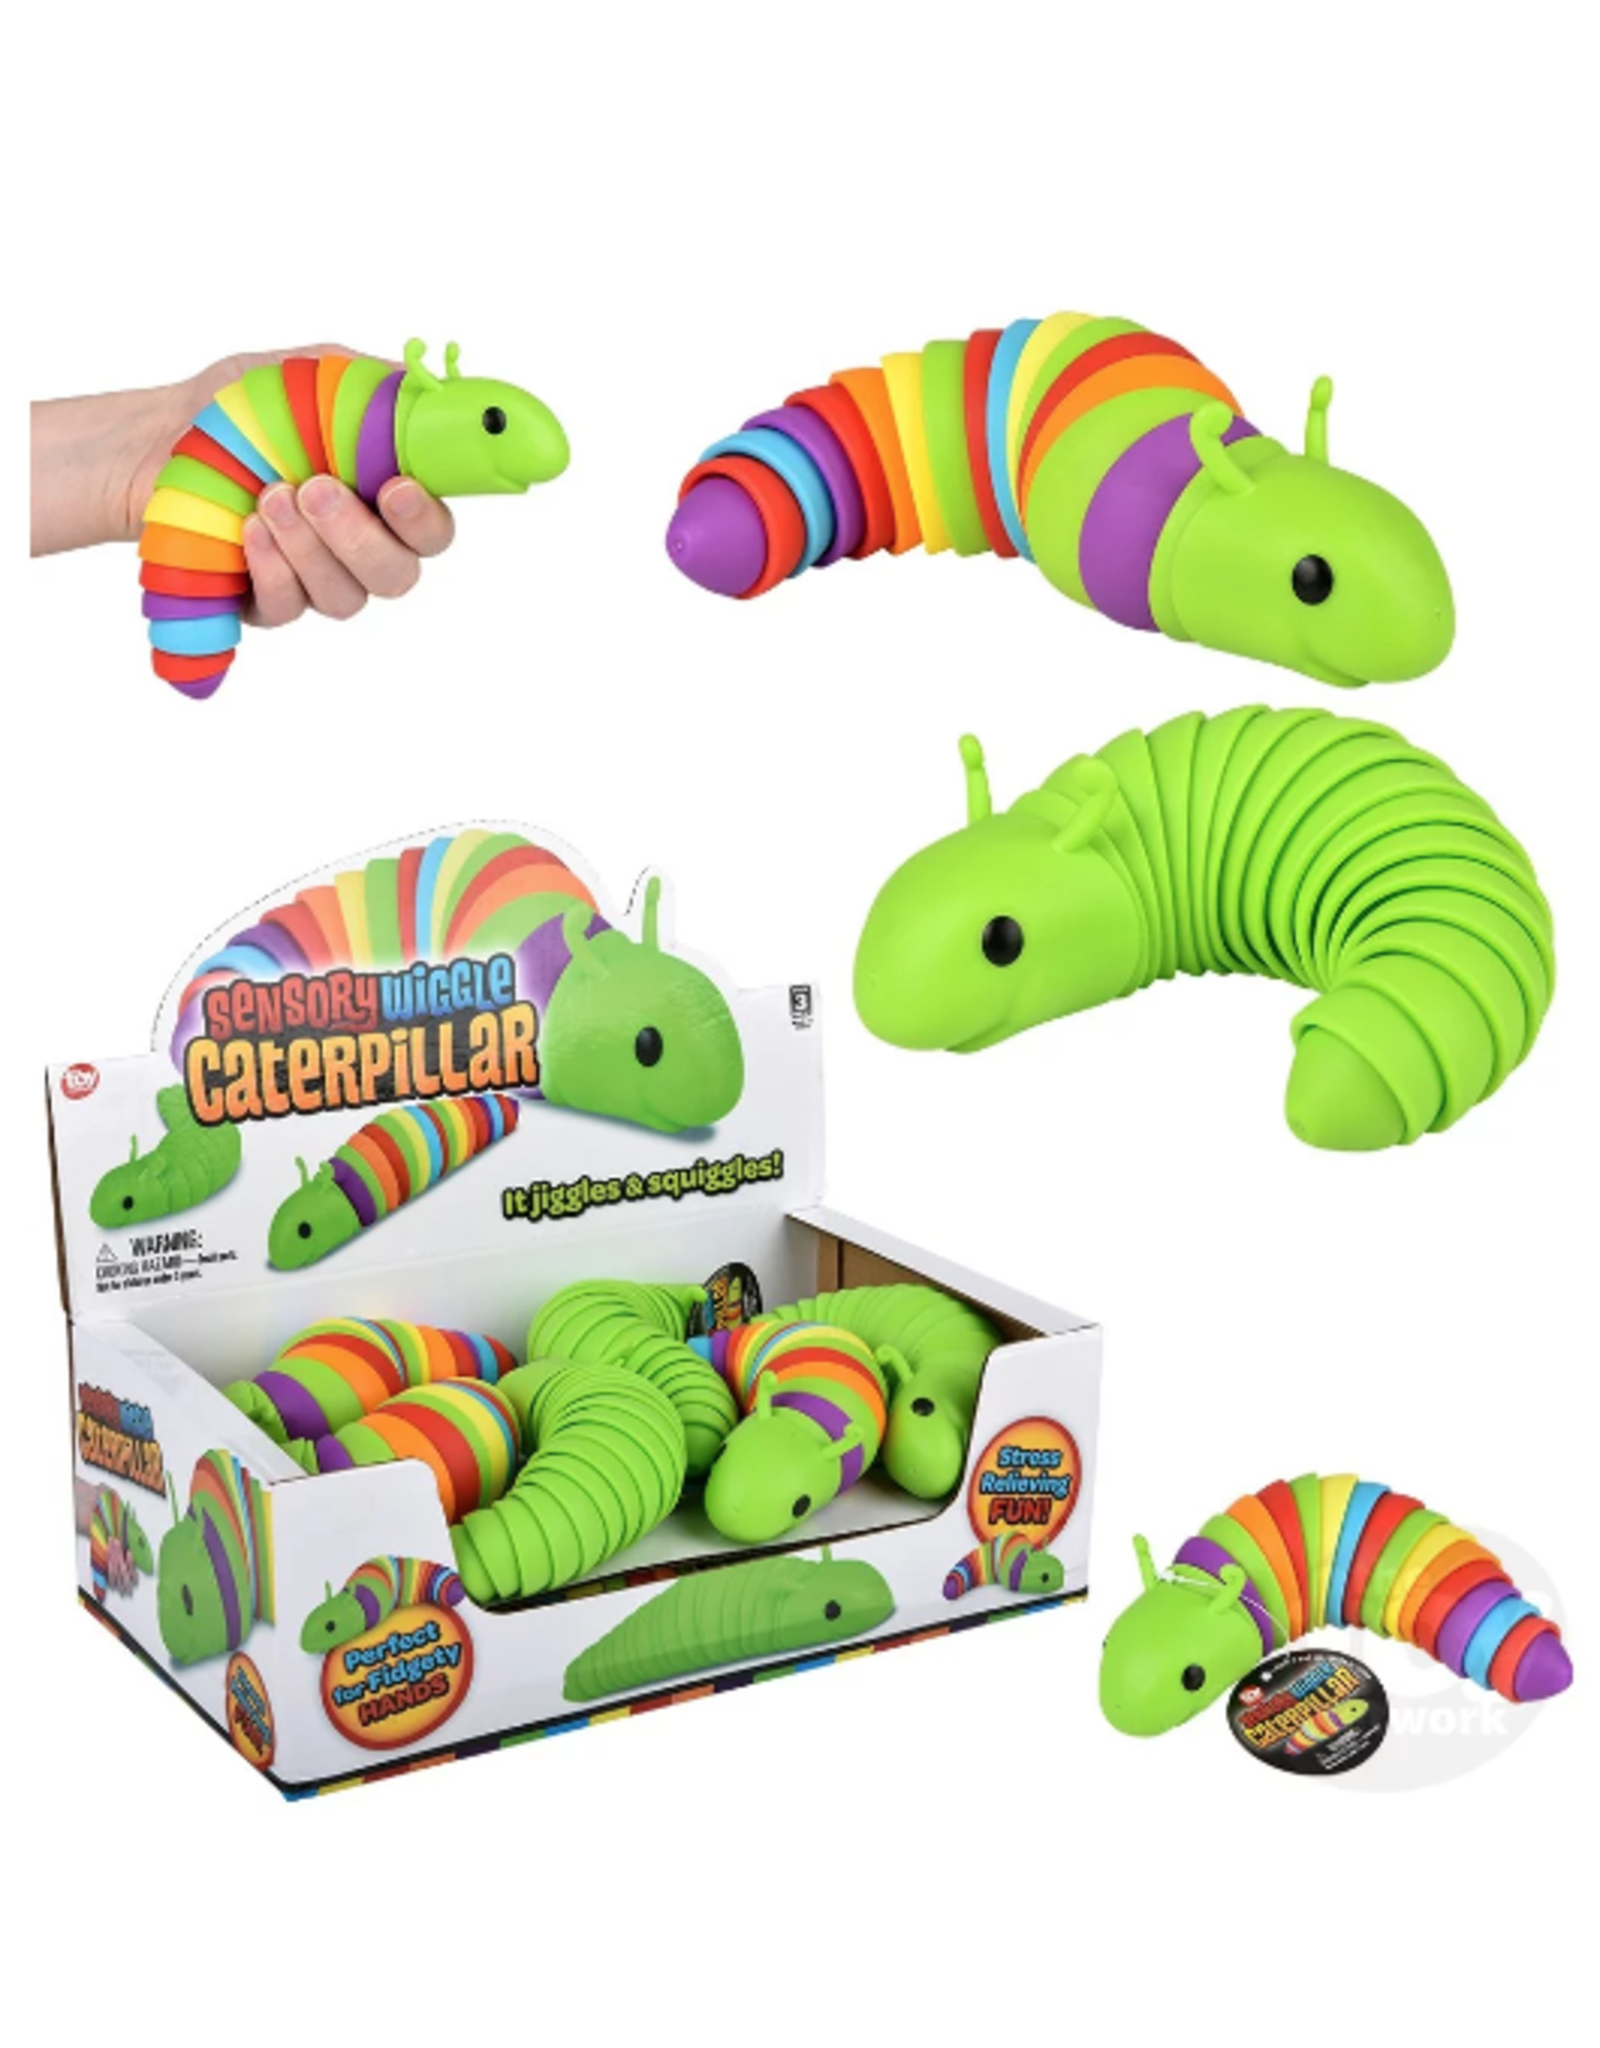 The Toy Network 7.5"  Wiggle Sensory Caterpillar